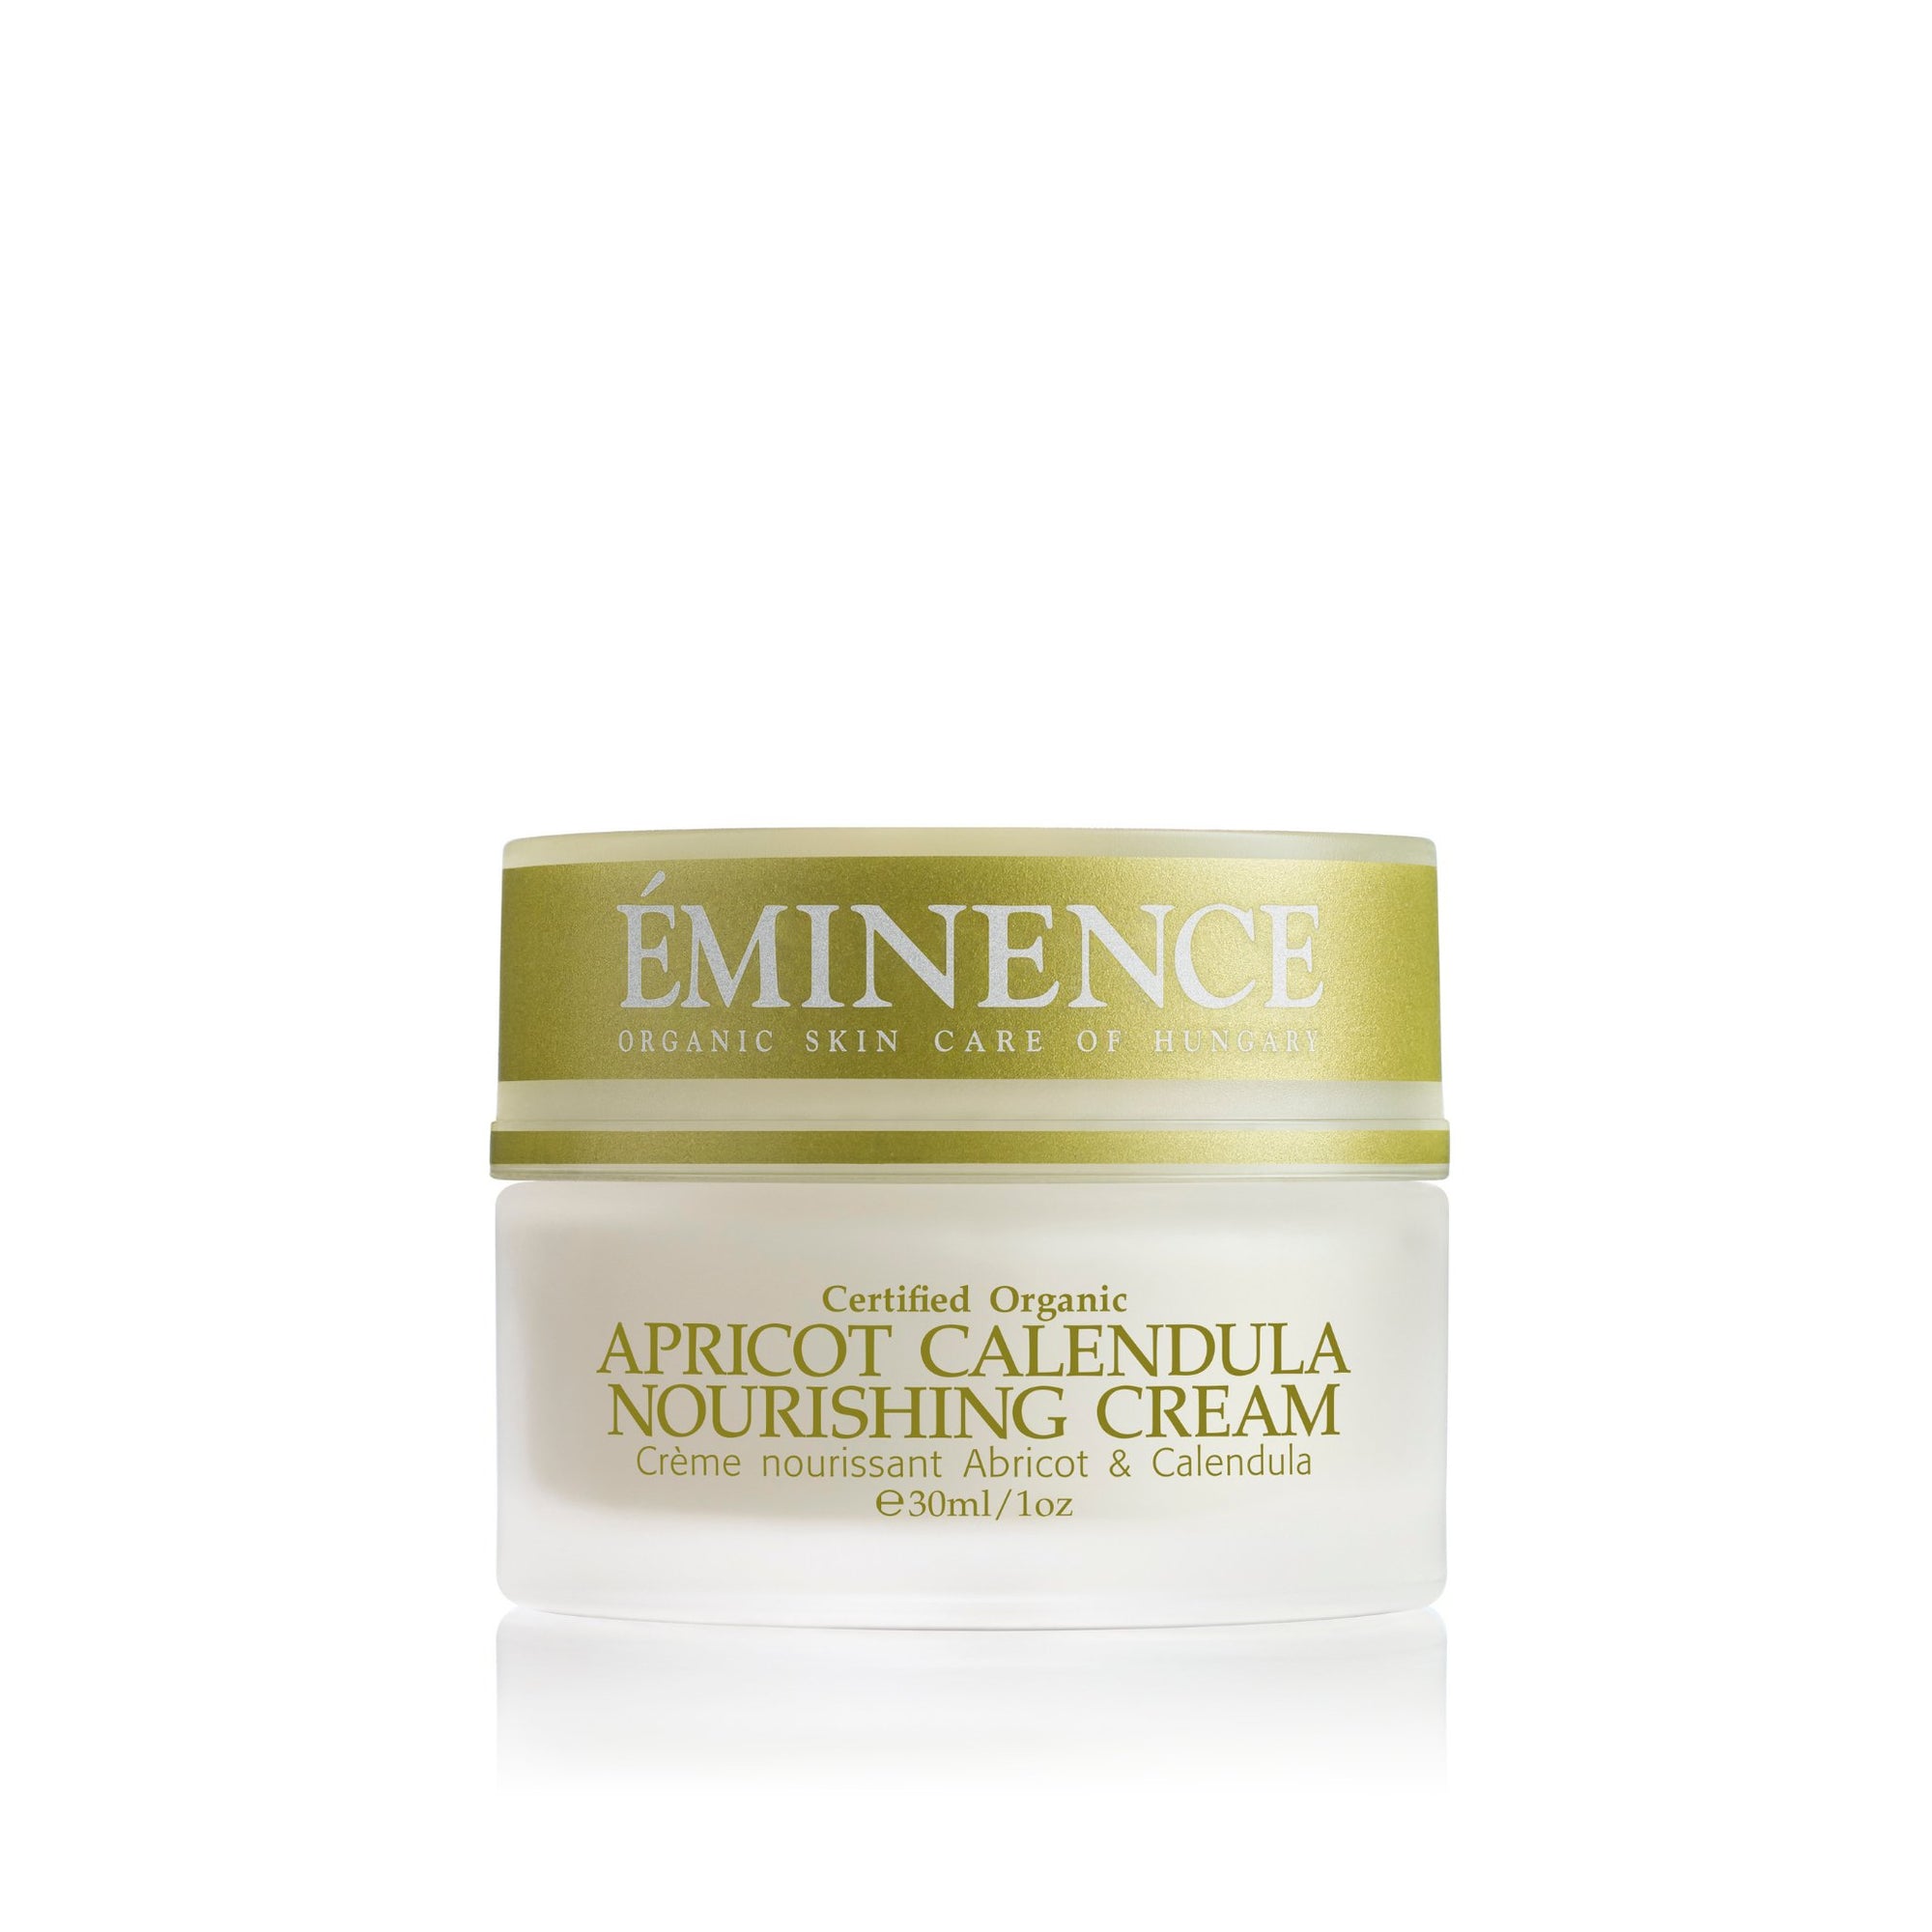 Eminence Organics - Eminence Apricot Calendula Nourishing Cream - ORESTA clean beauty simplified